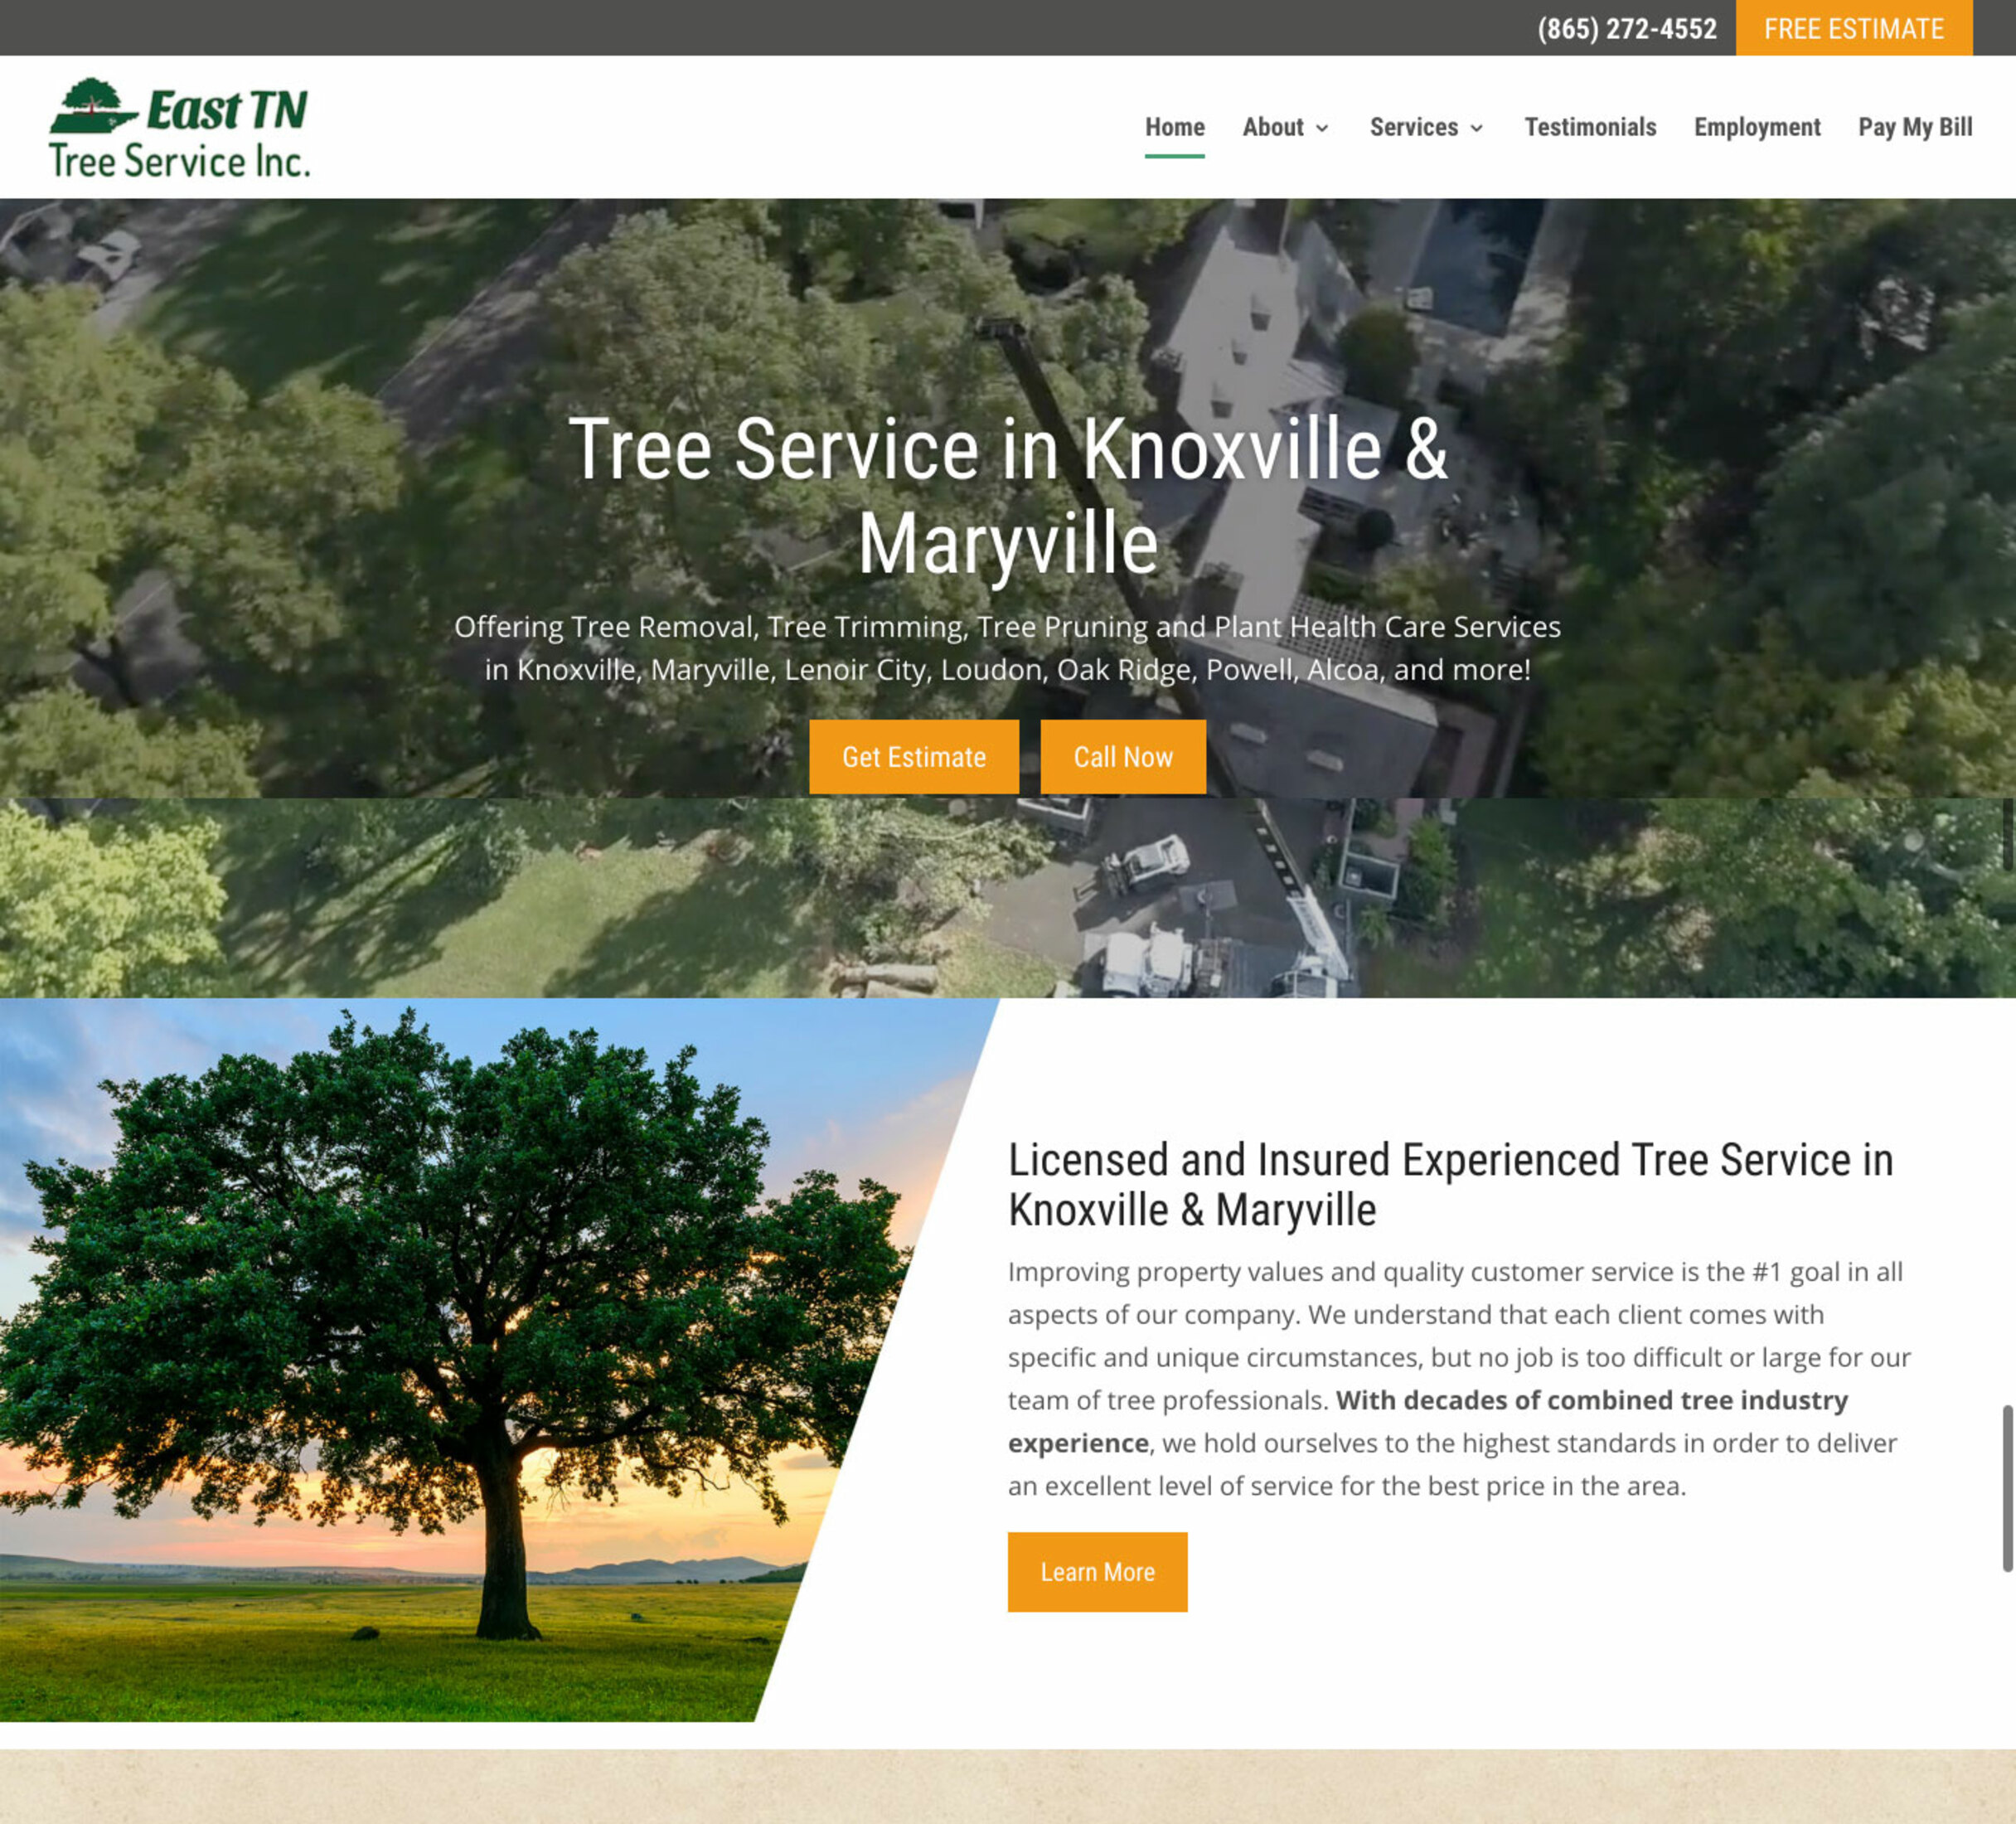 East TN Tree Service